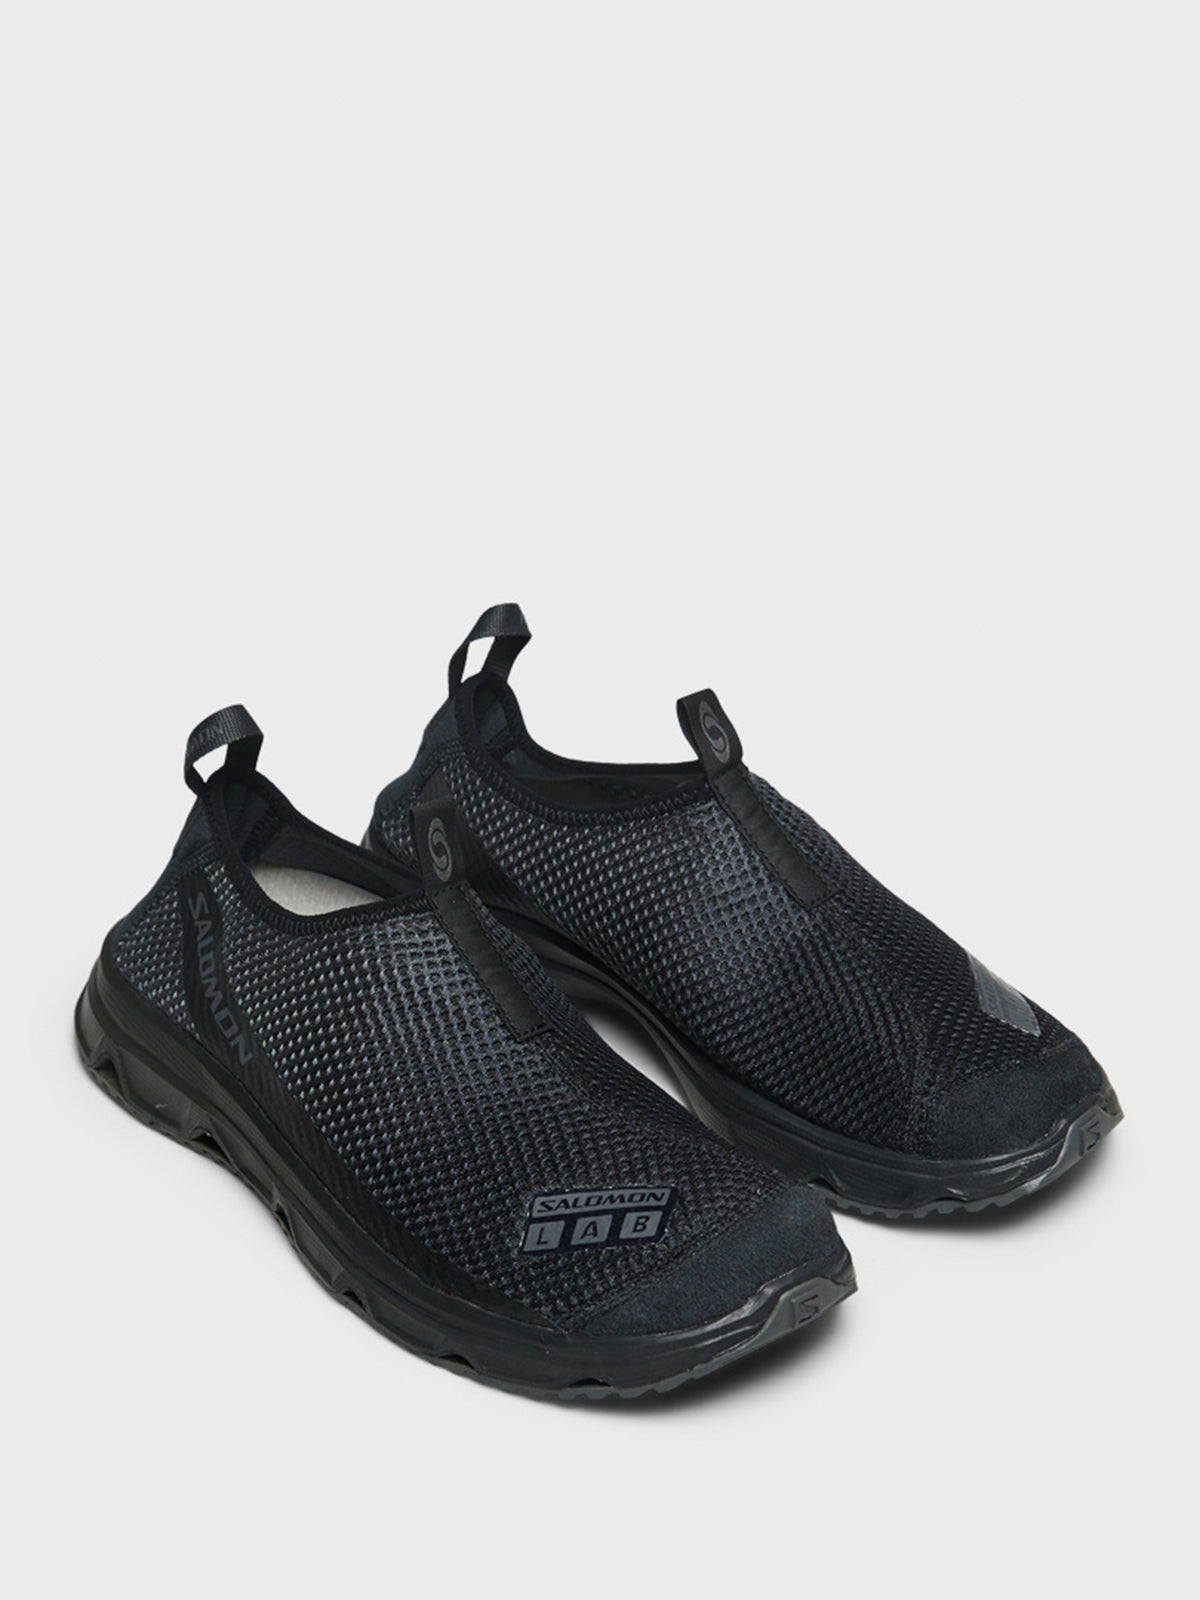 RX MOC 3.0 Suede Sneakers in Black